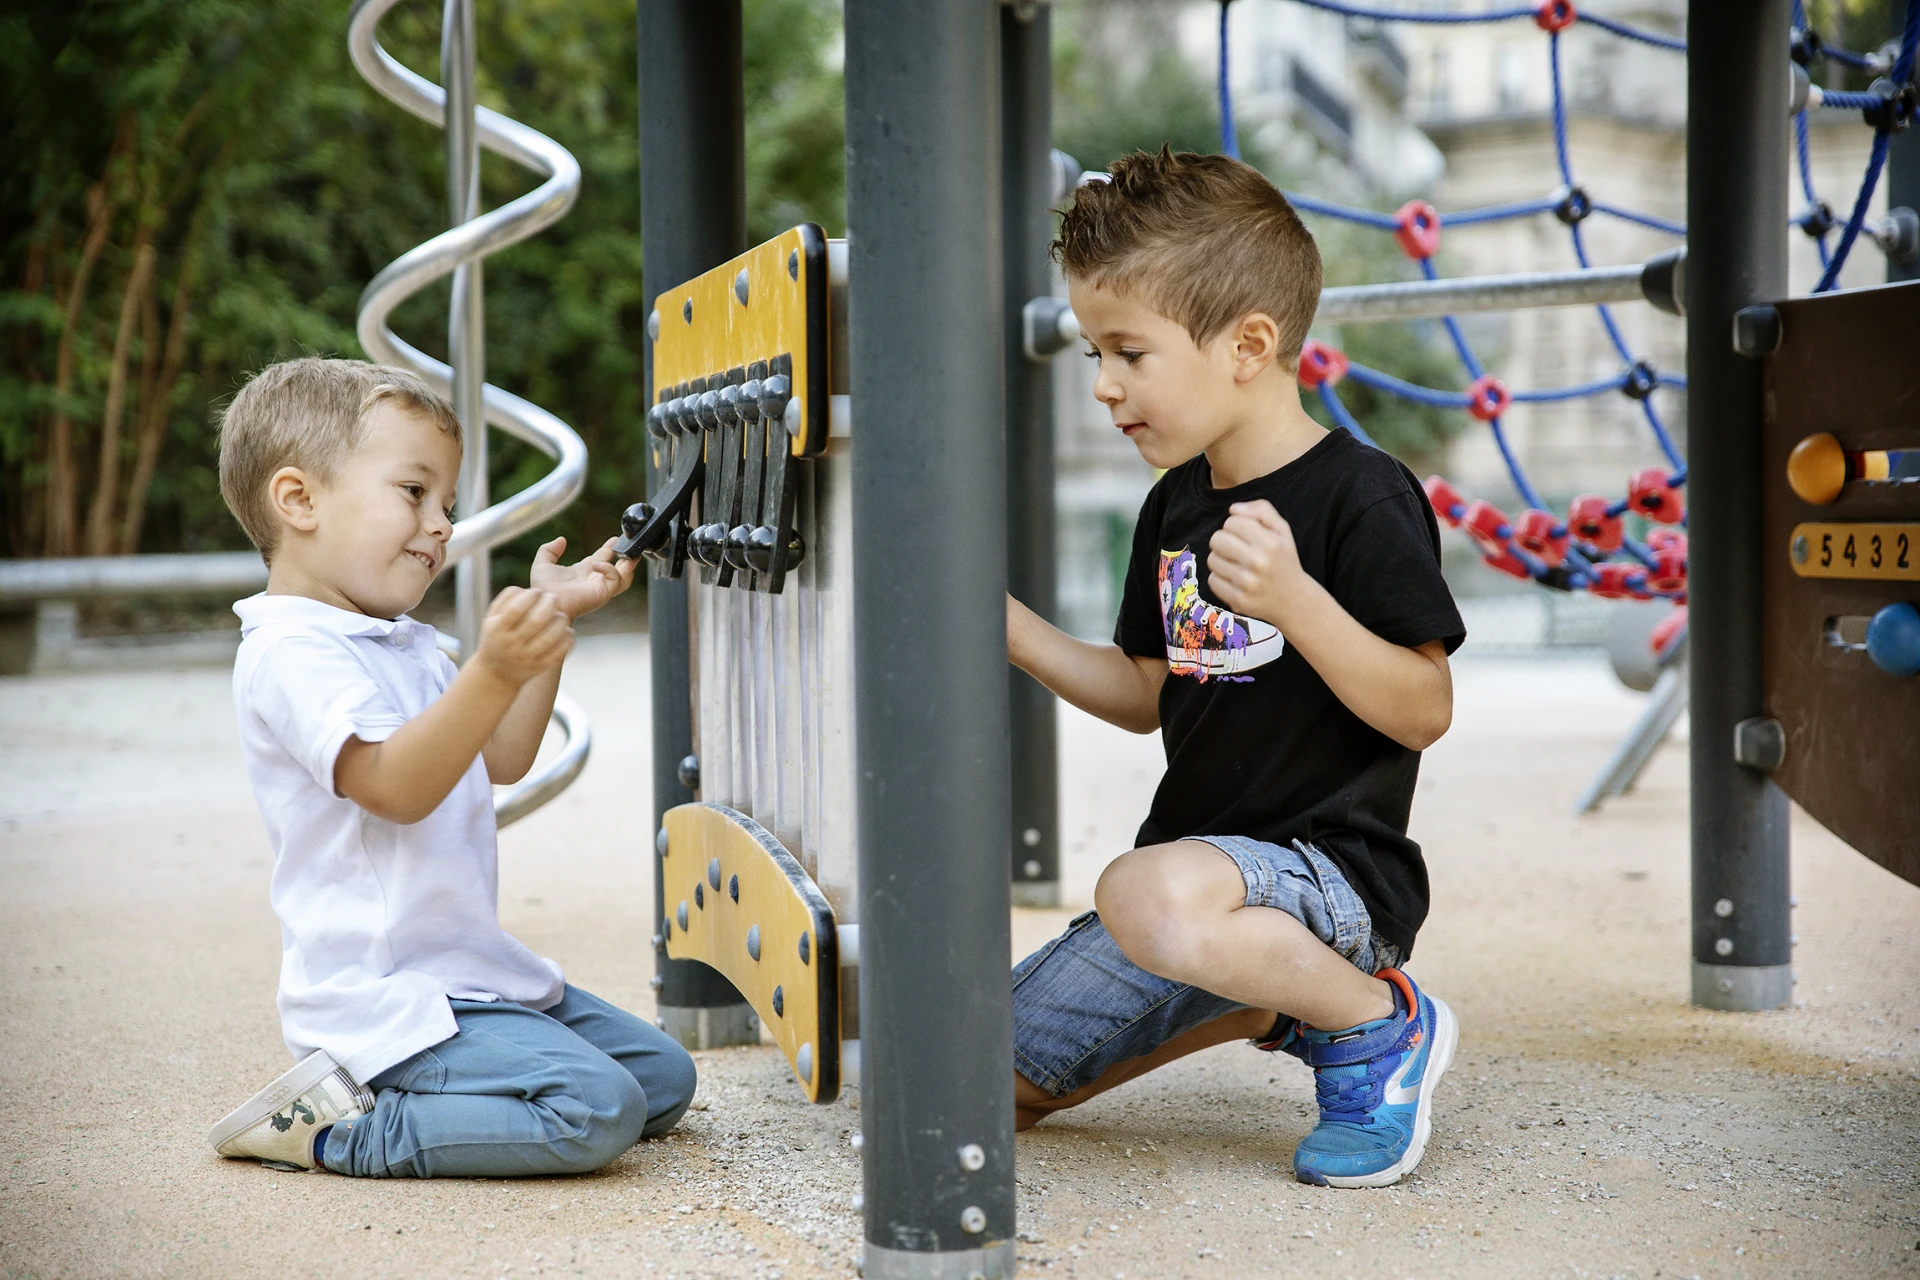 Children playing with music and sound playground equipment